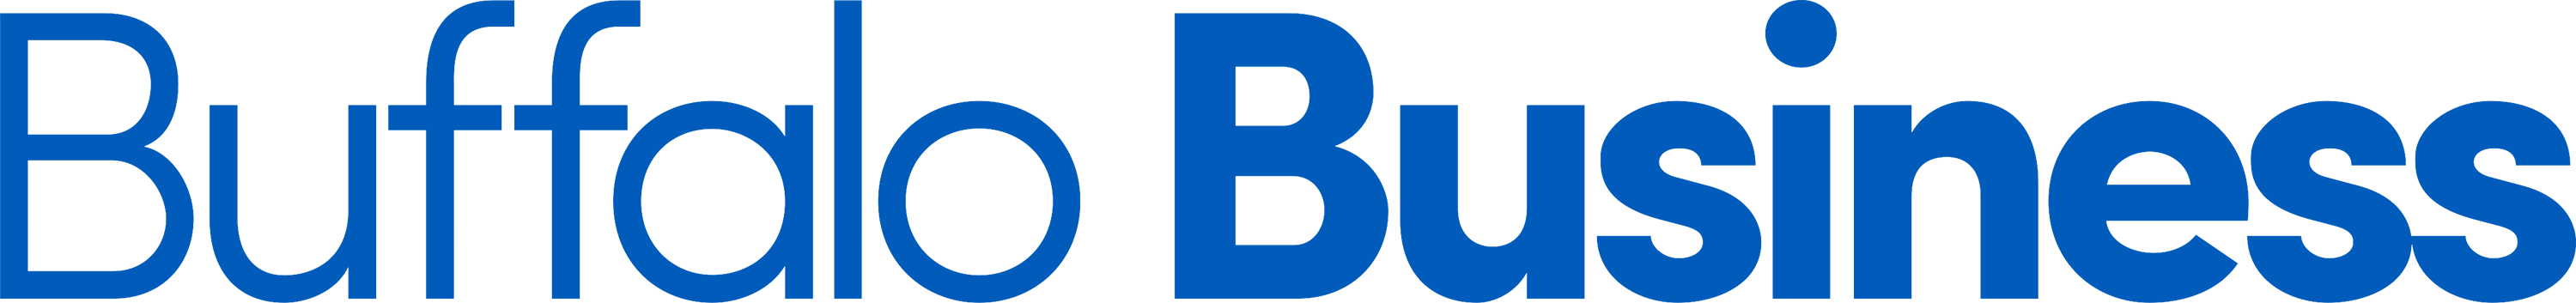 Buffalo Business logo